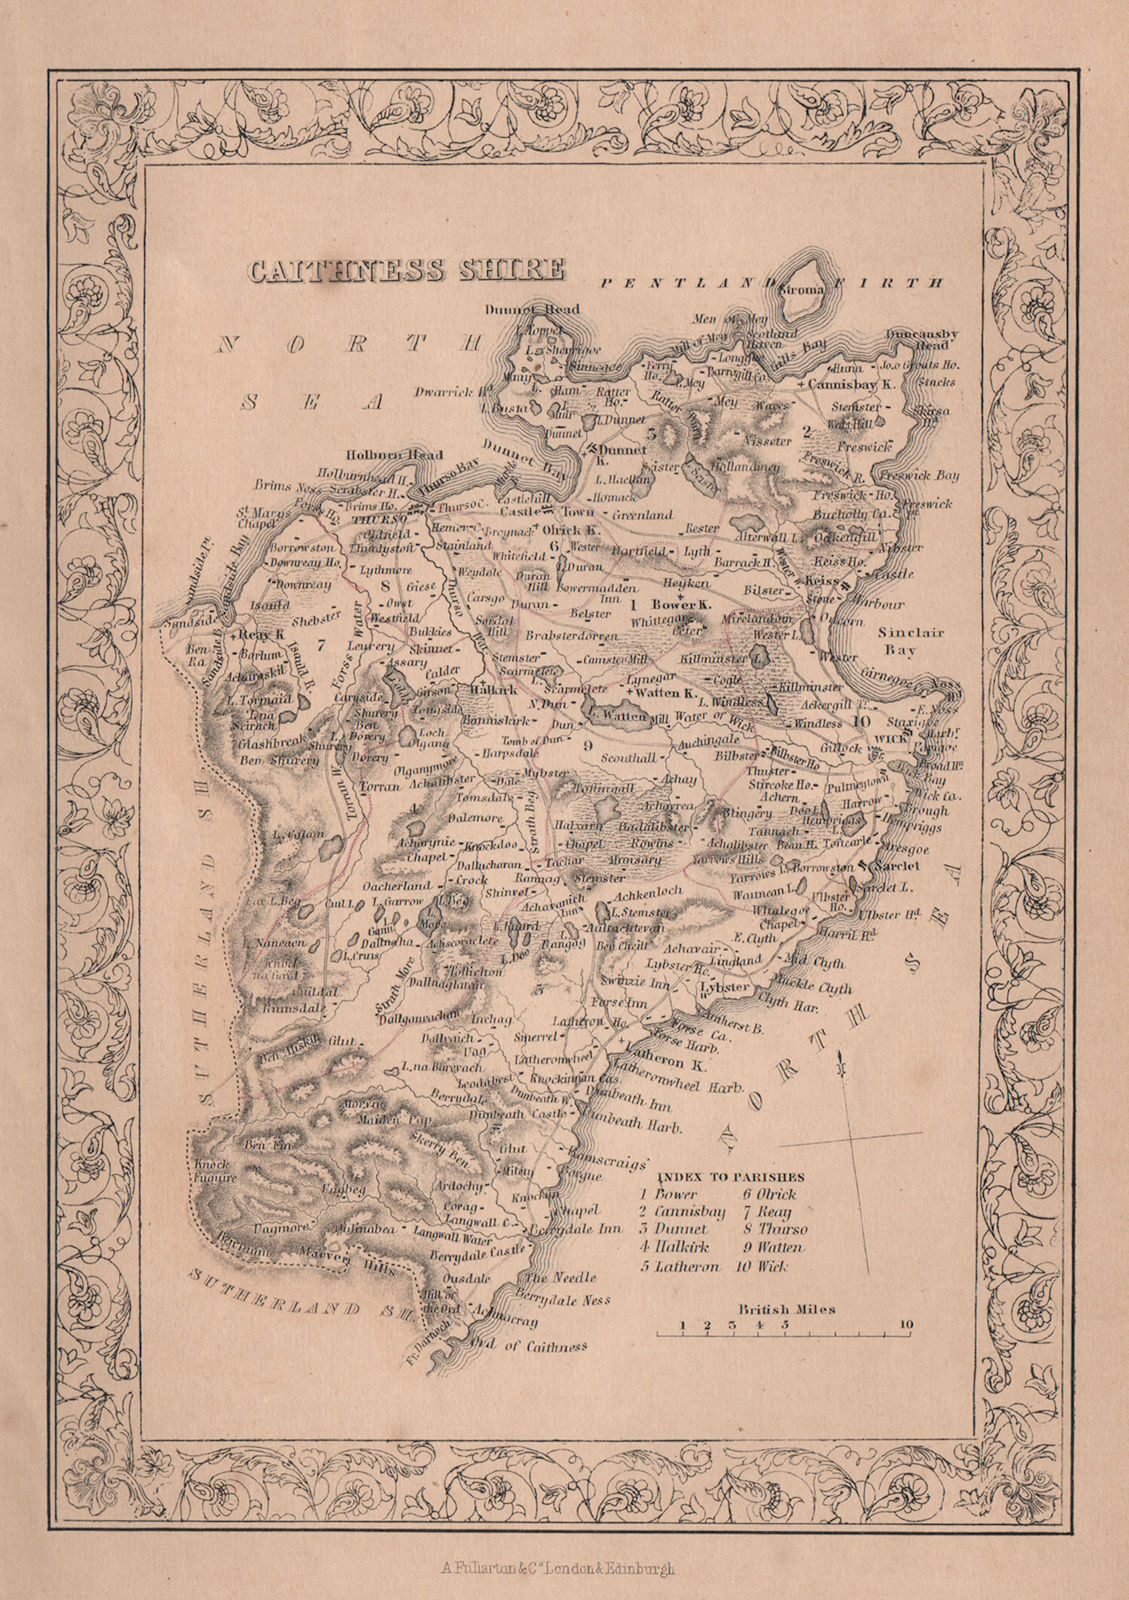 Decorative antique county map of Caithness-shire, Scotland. FULLARTON 1868